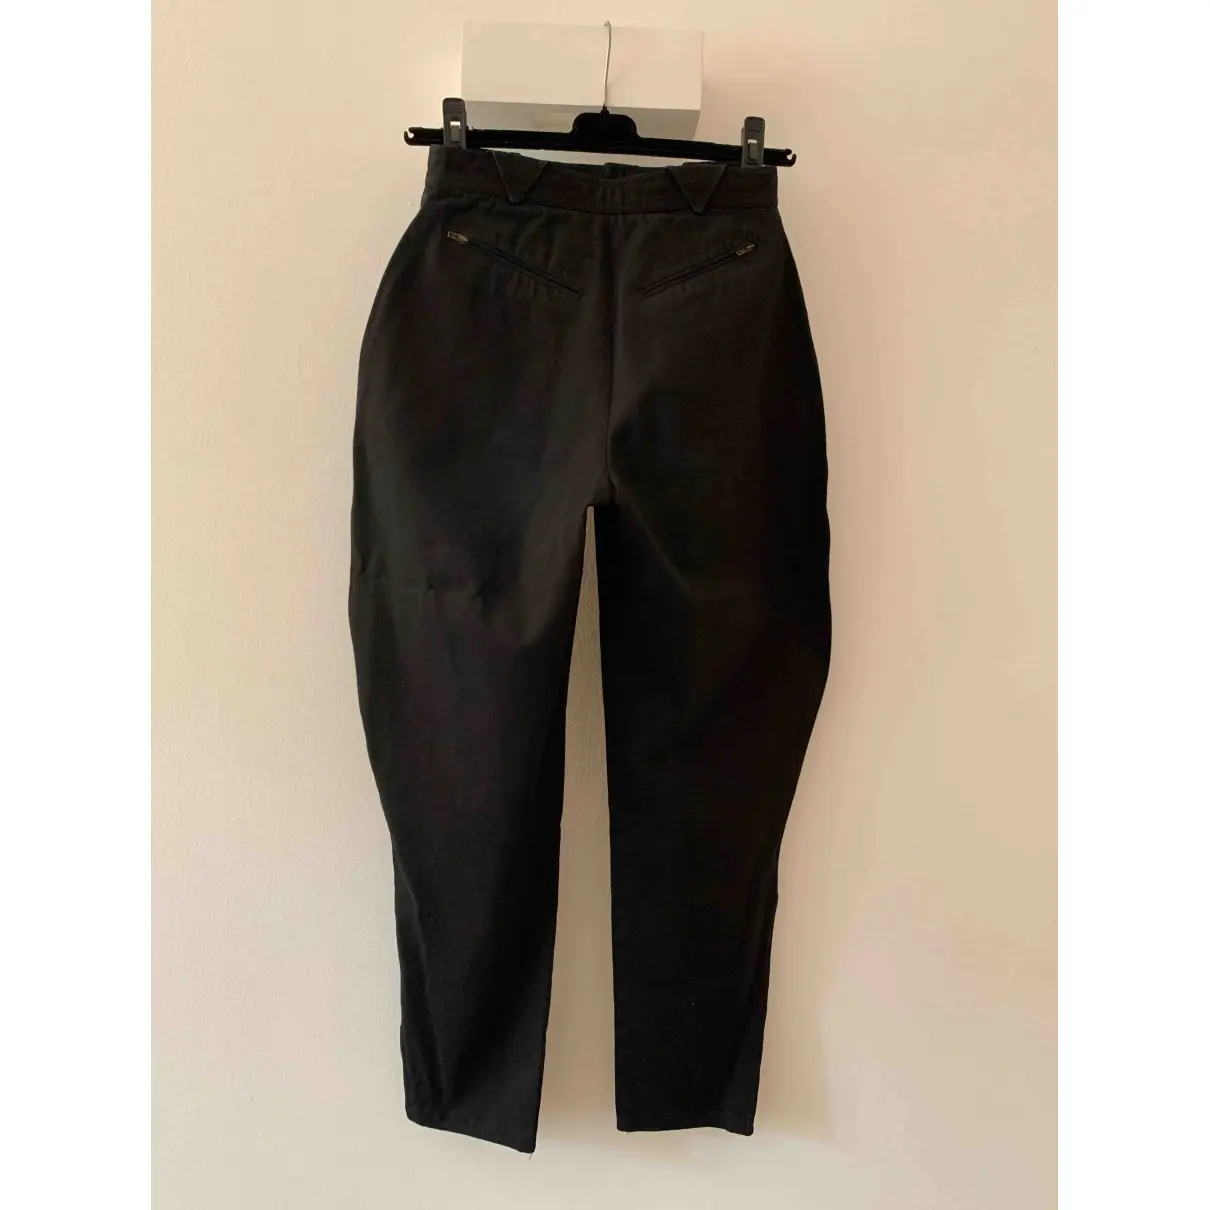 Buy Thierry Mugler Carot pants online - Vintage